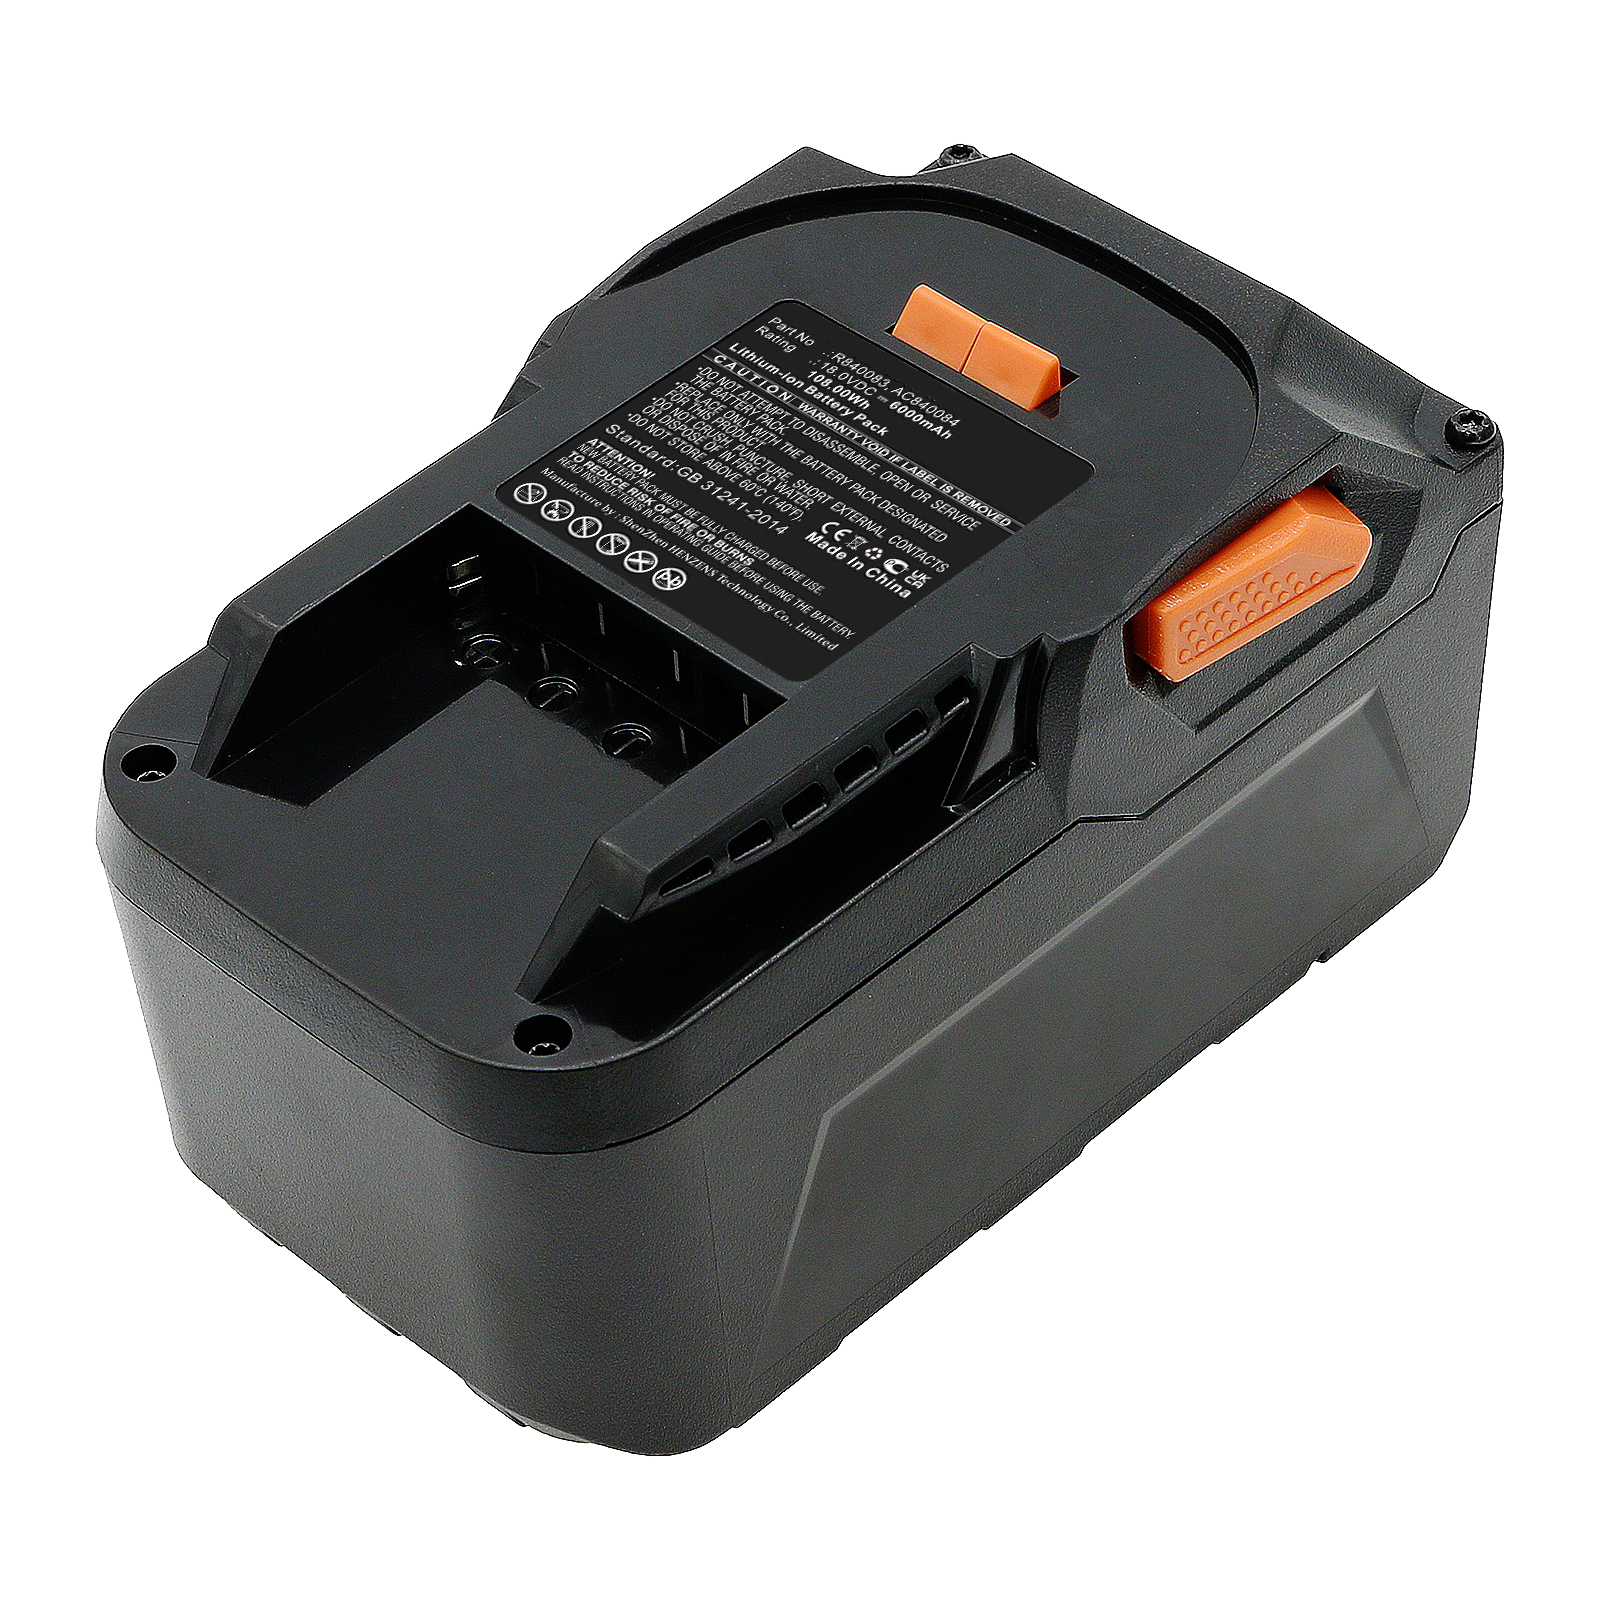 Synergy Digital Power Tool Battery, Compatible with Ridgid AC840084 Power Tool Battery (Li-ion, 18V, 6000mAh)